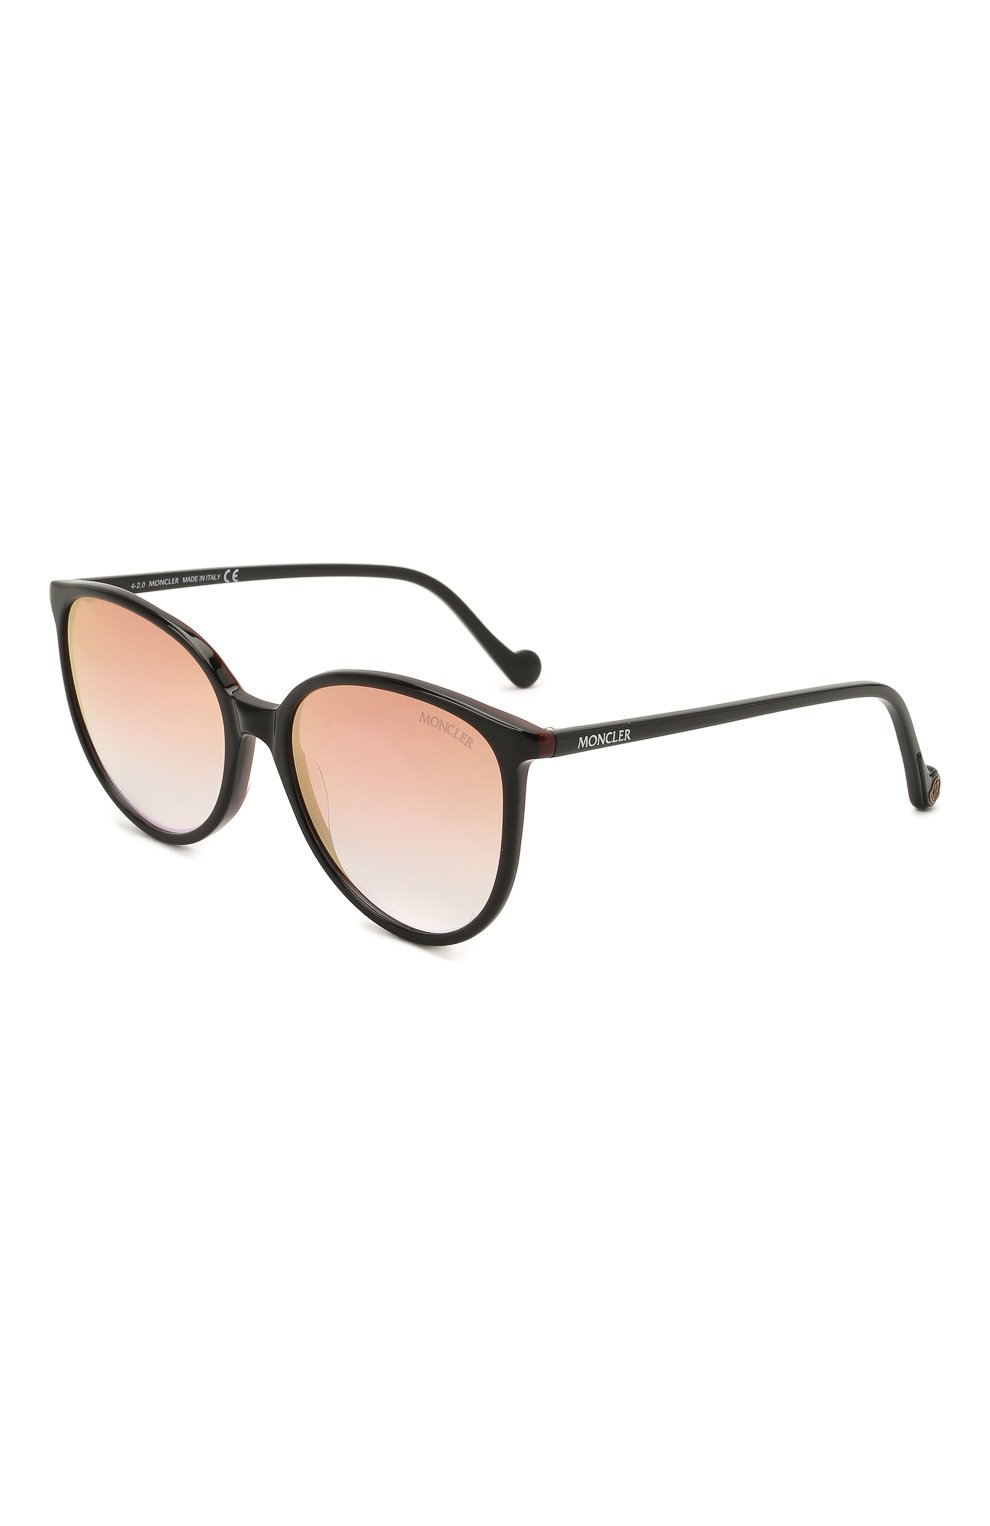 Женские солнцезащитные очки MONCLER черного цвета, арт. ML 0177 05T 56 с/з очки | Фото 1 (Материал: Пластик; Тип очков: С/з; Очки форма: Cat-eye)